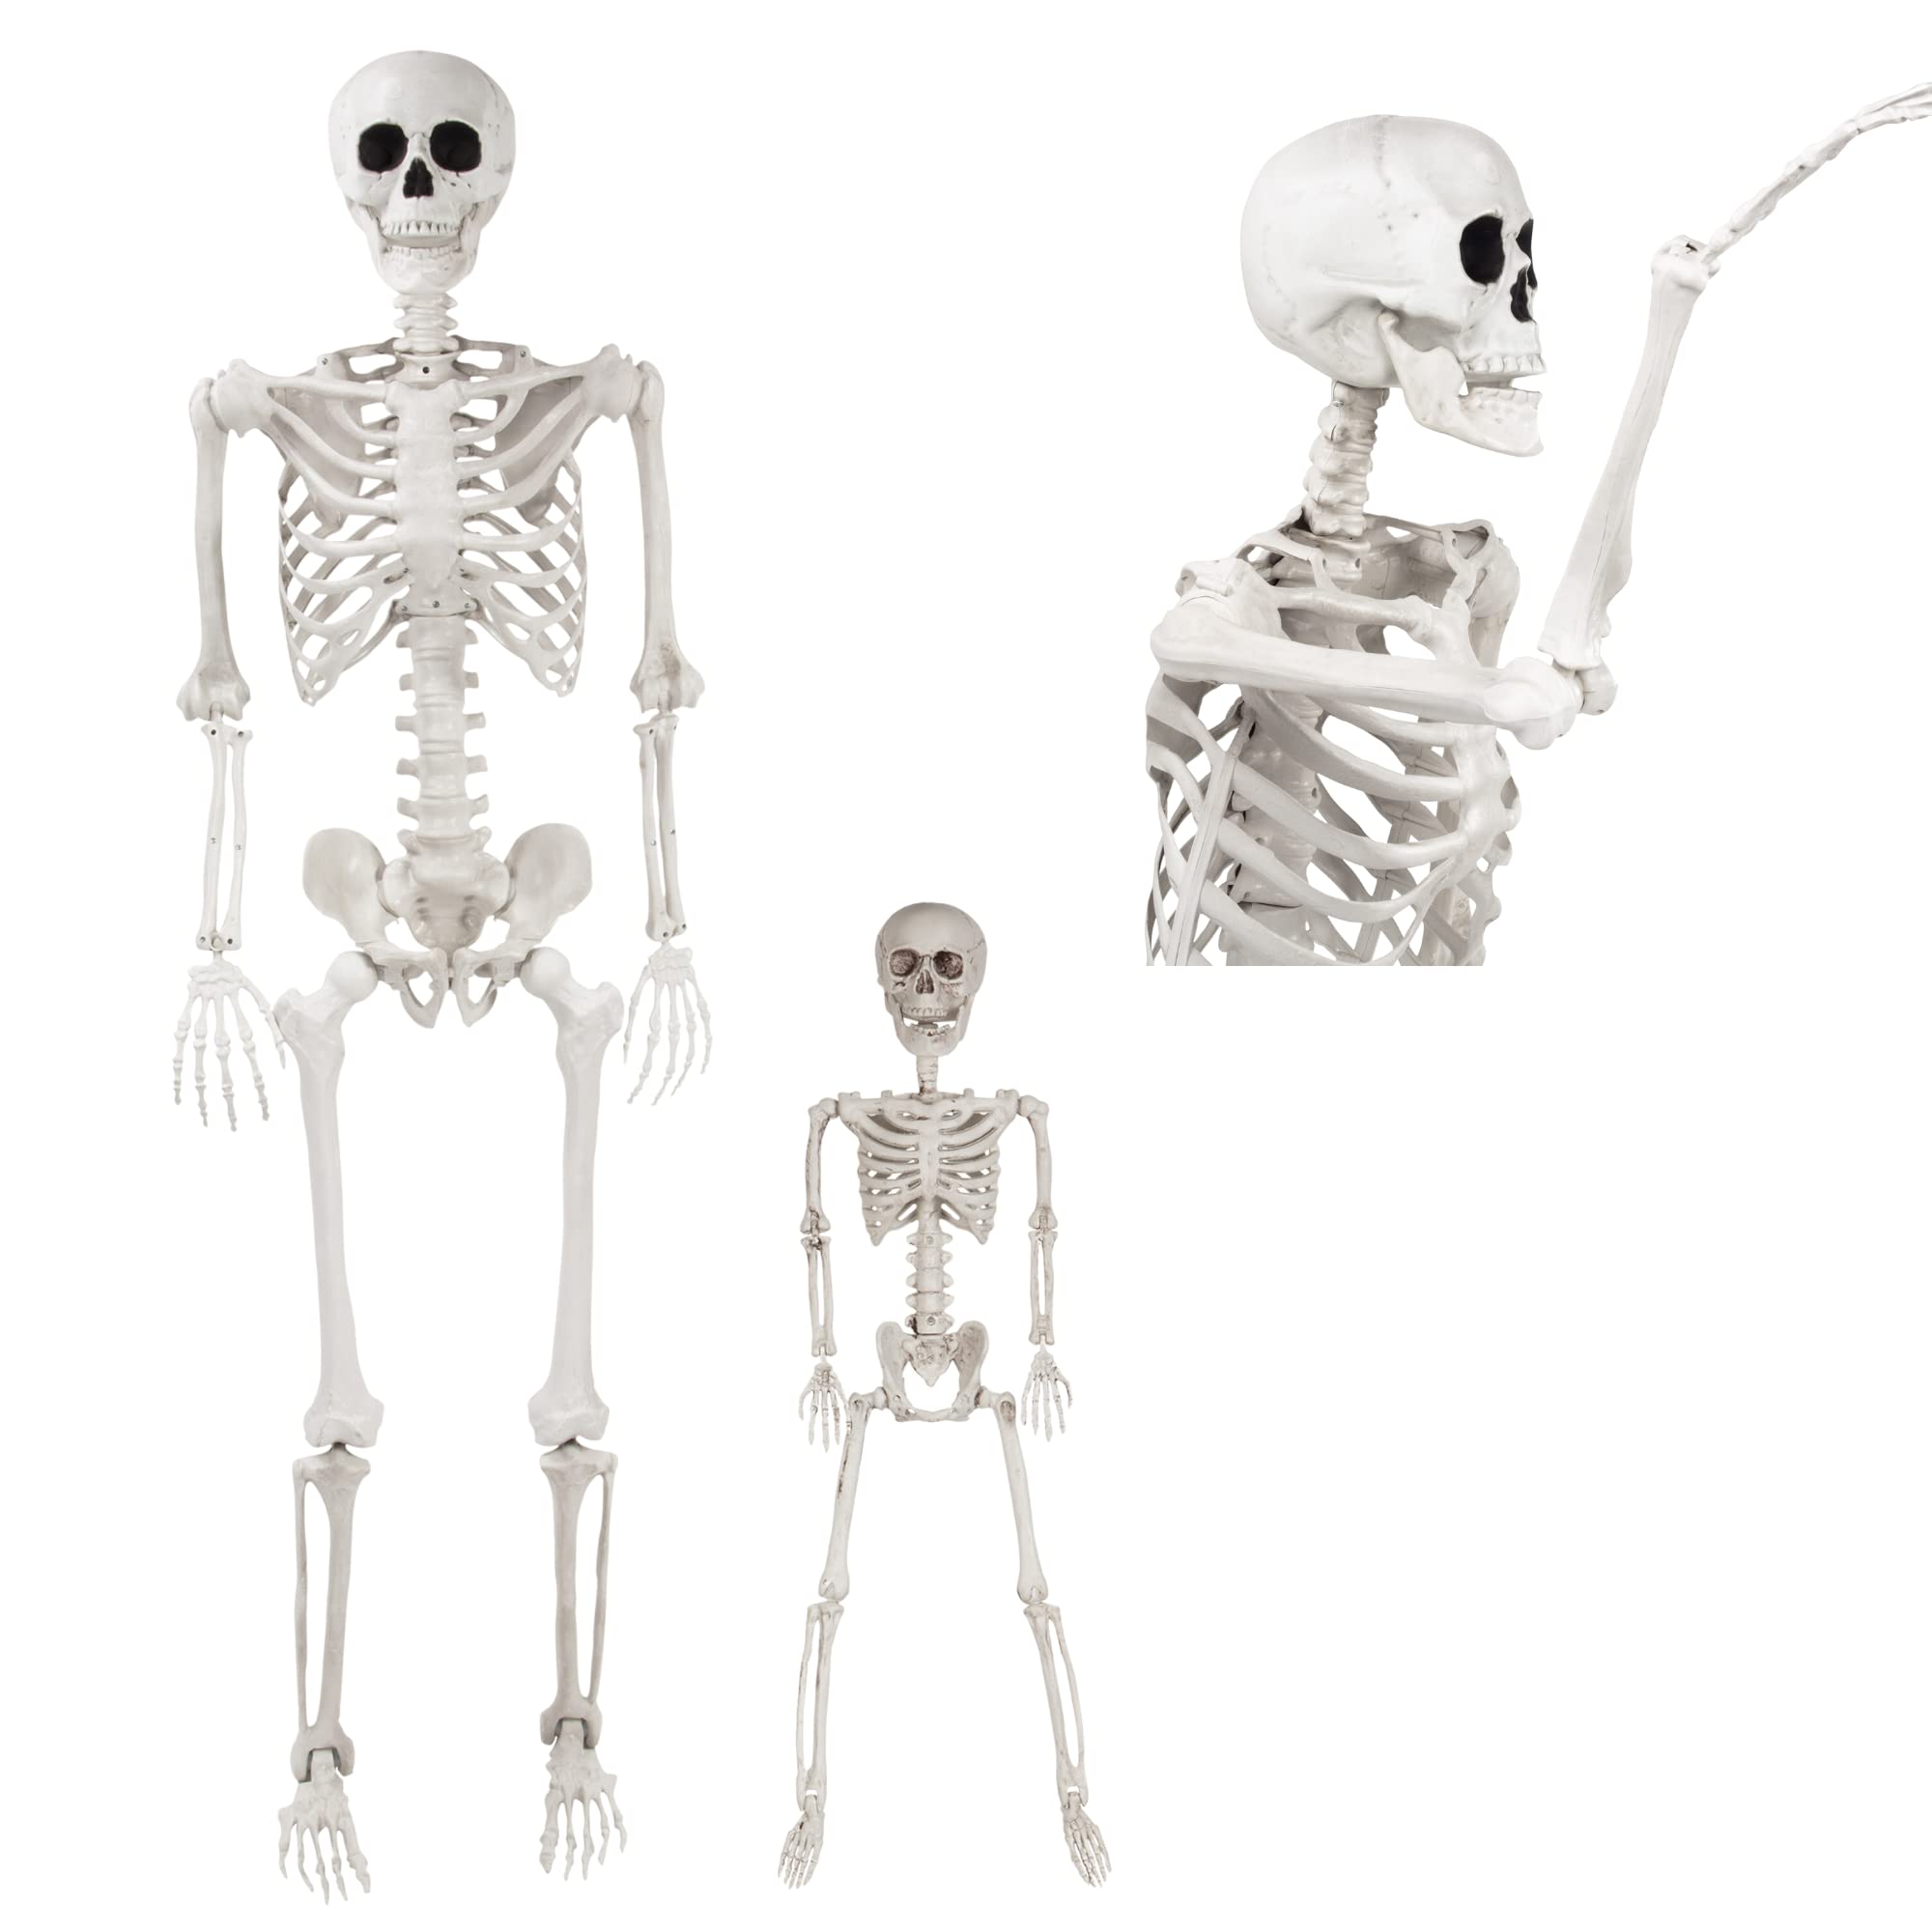 Posable Life Size Human Skeleton Family Set of 2 -Adult (5' 2